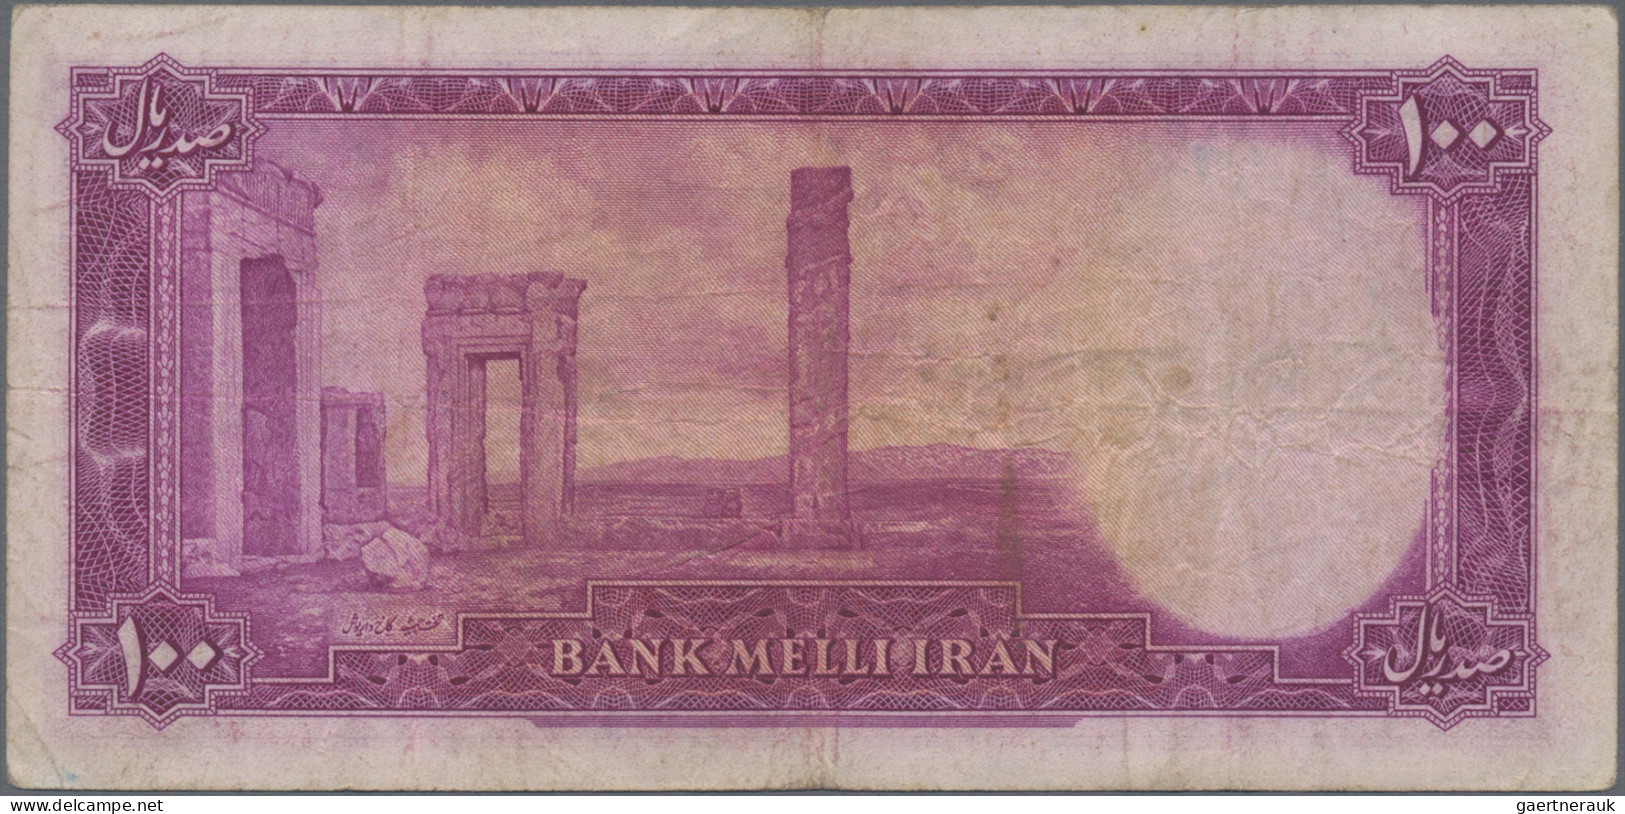 Iran: Bank Melli Iran, lot with 7 banknotes, series ND(1948-51), with 10 Rials (